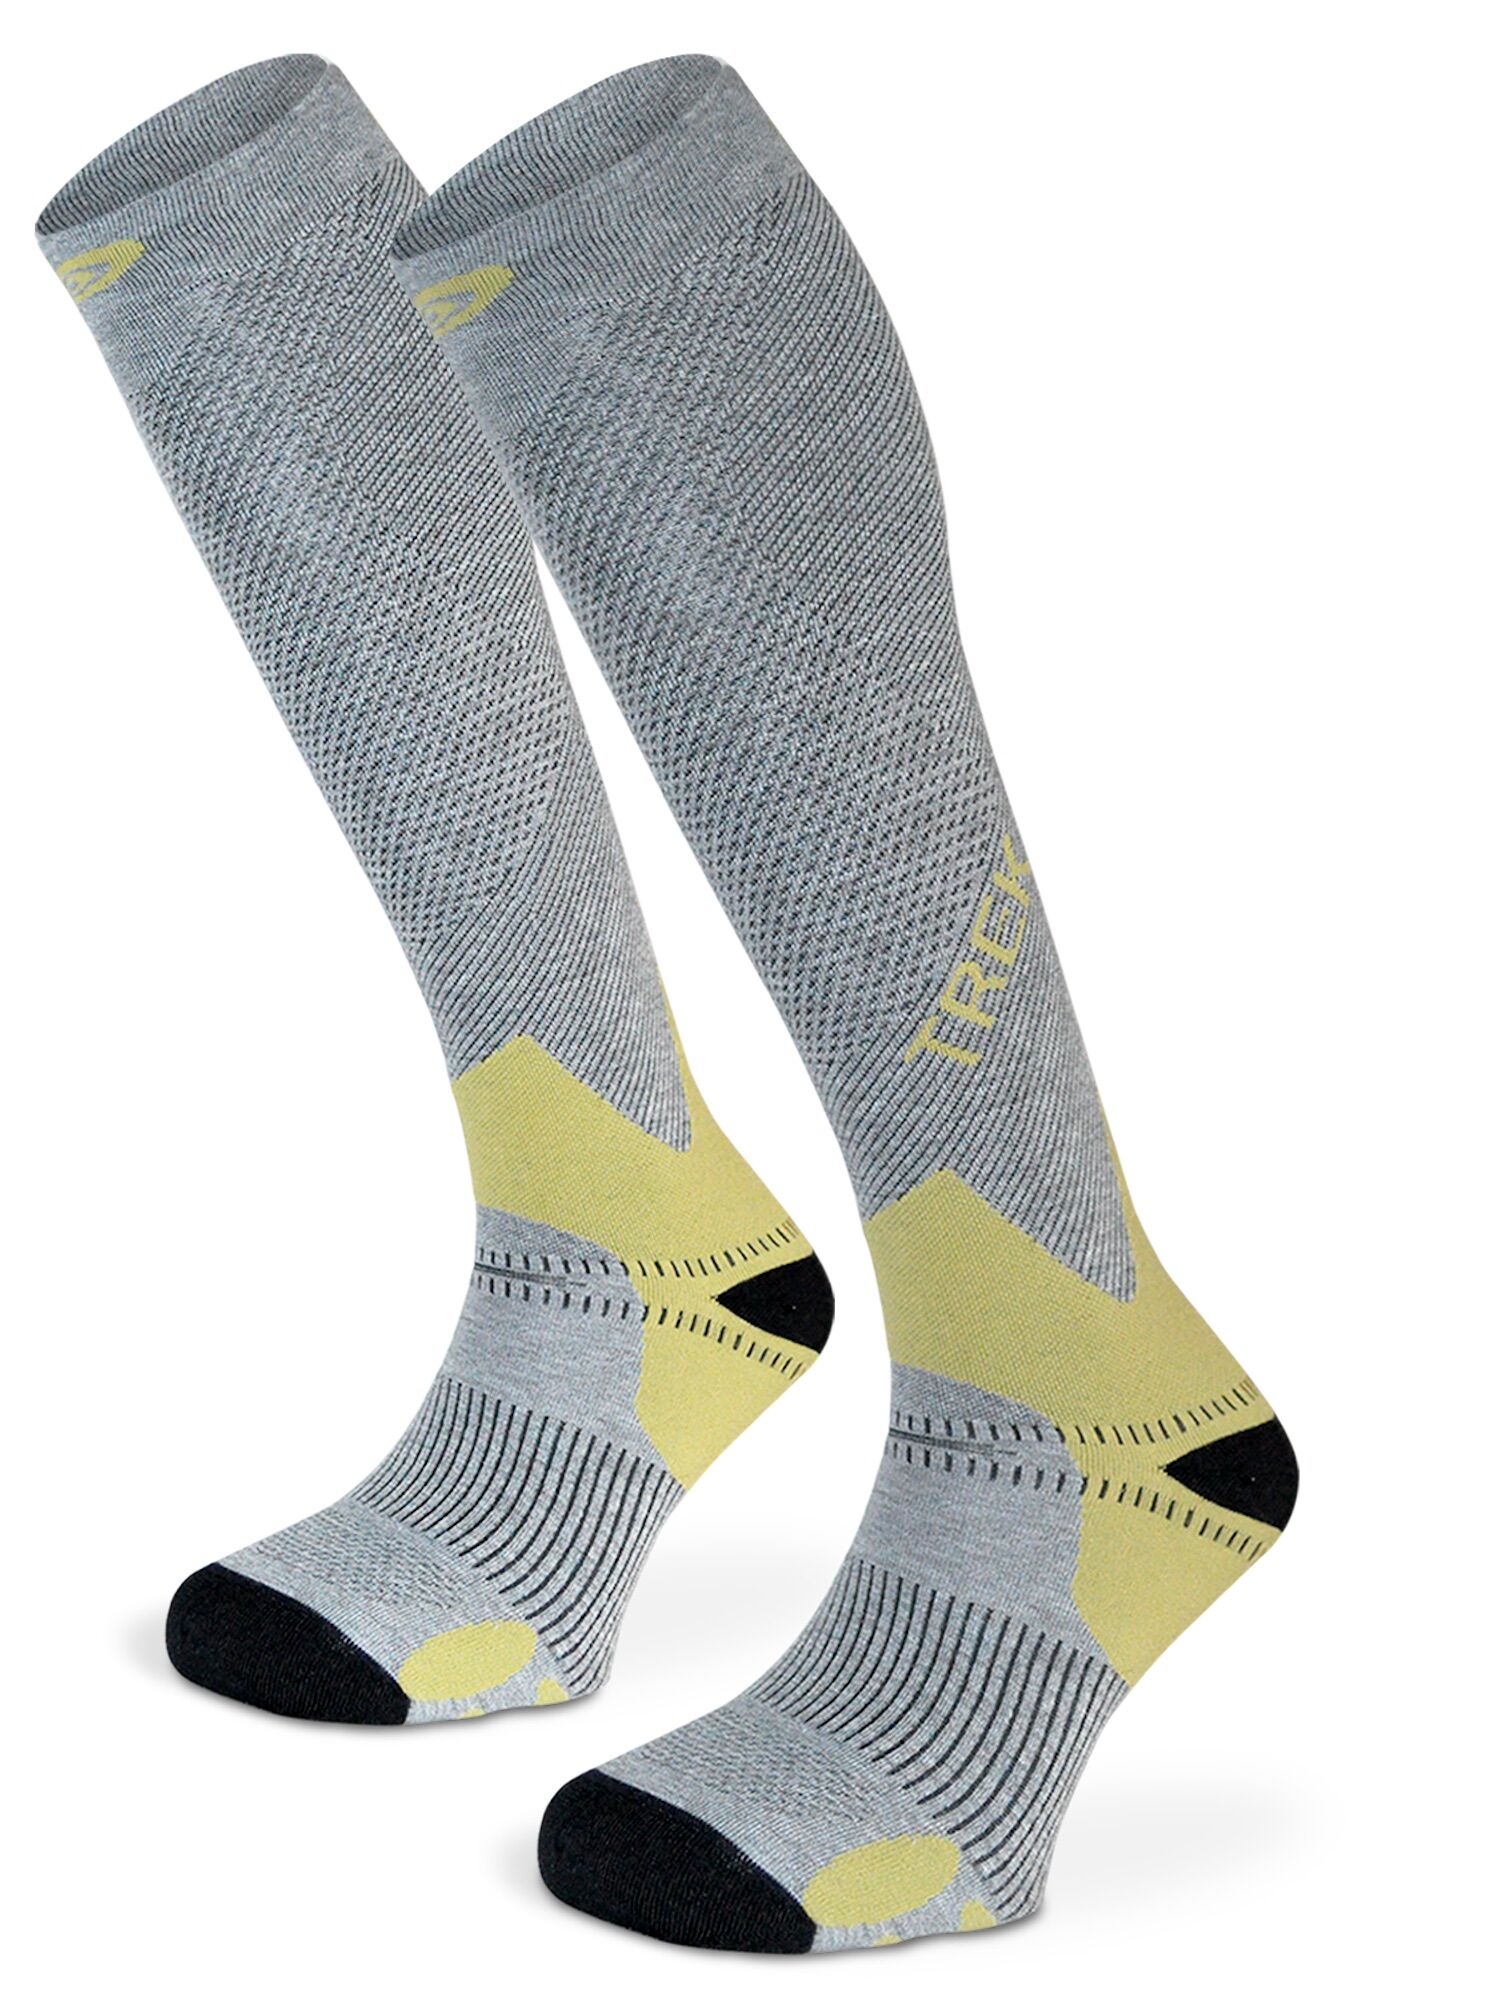 BV Sport - Trek Compression - Walking socks - Men's